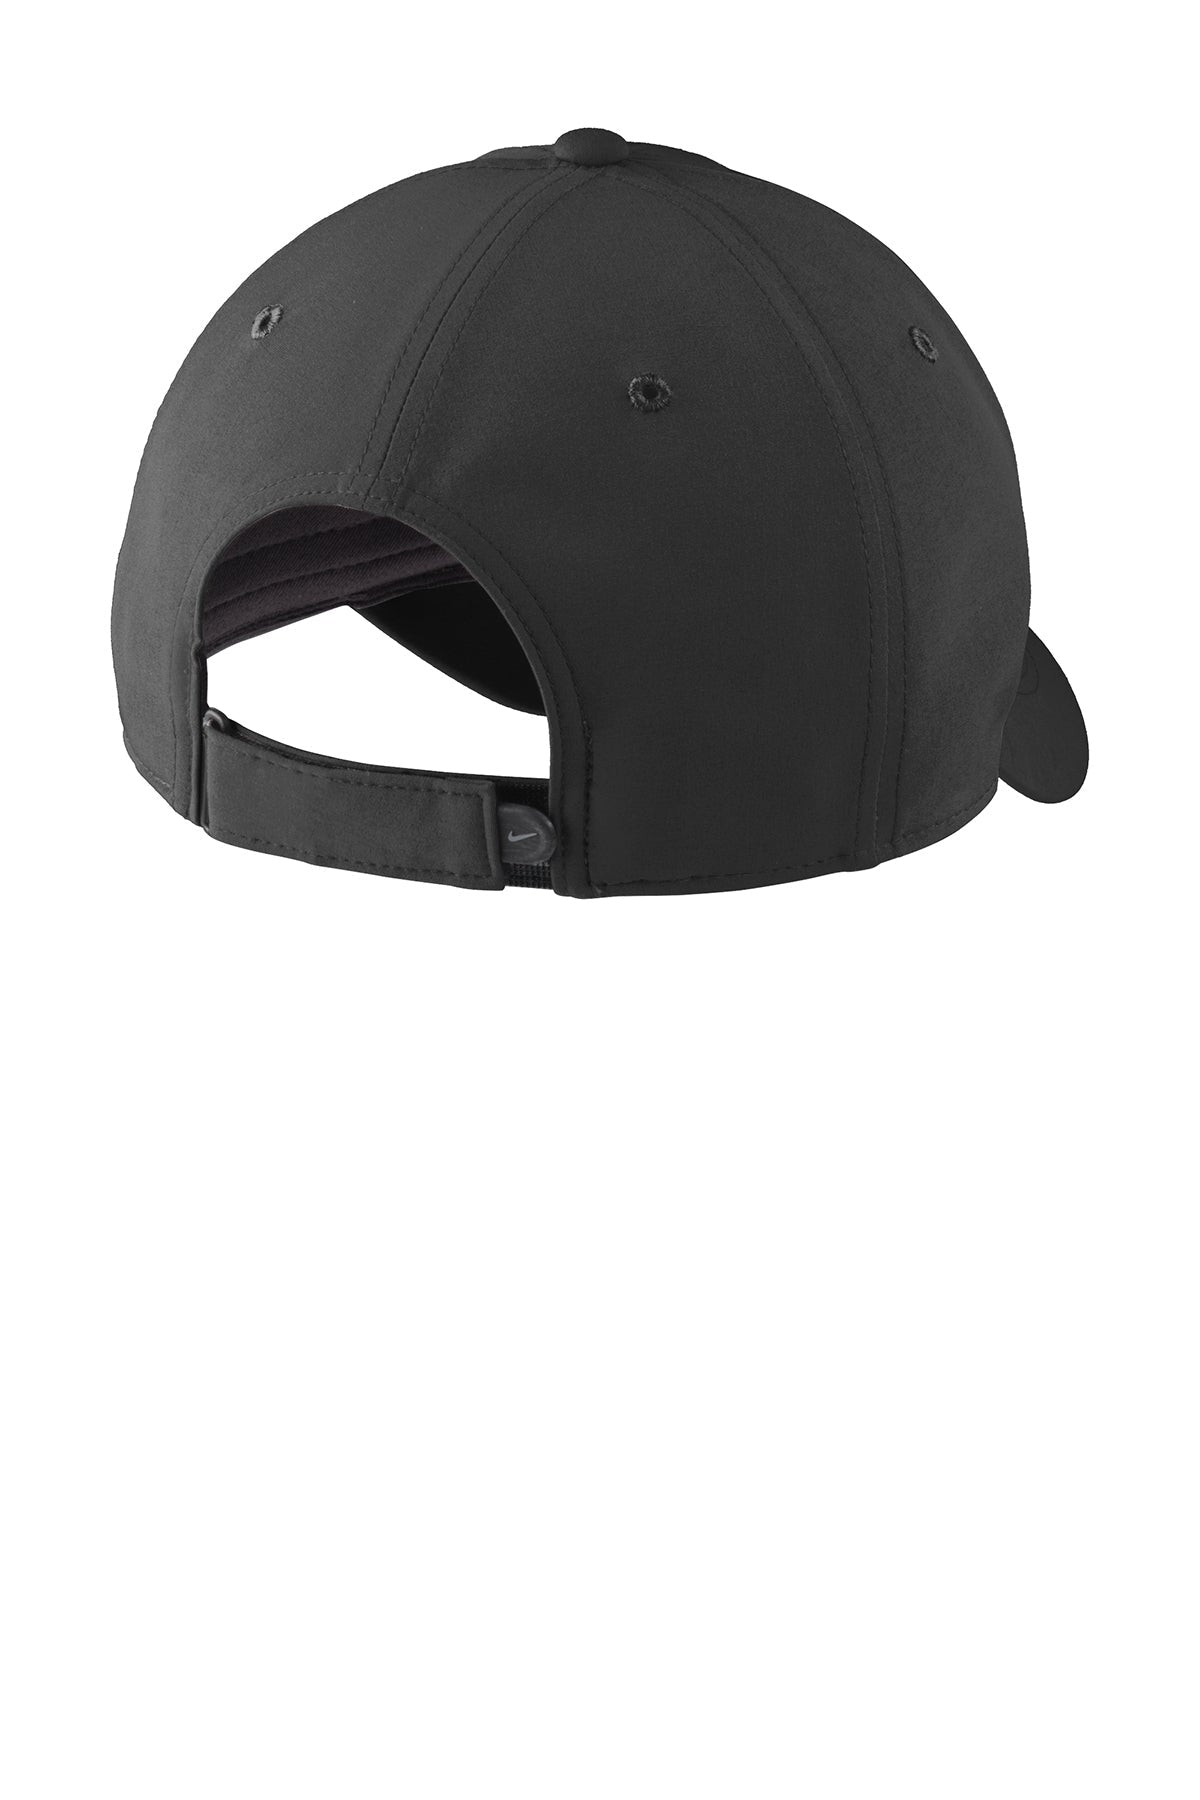 Nike Dri-FIT Legacy Custom Caps, Black/ Black